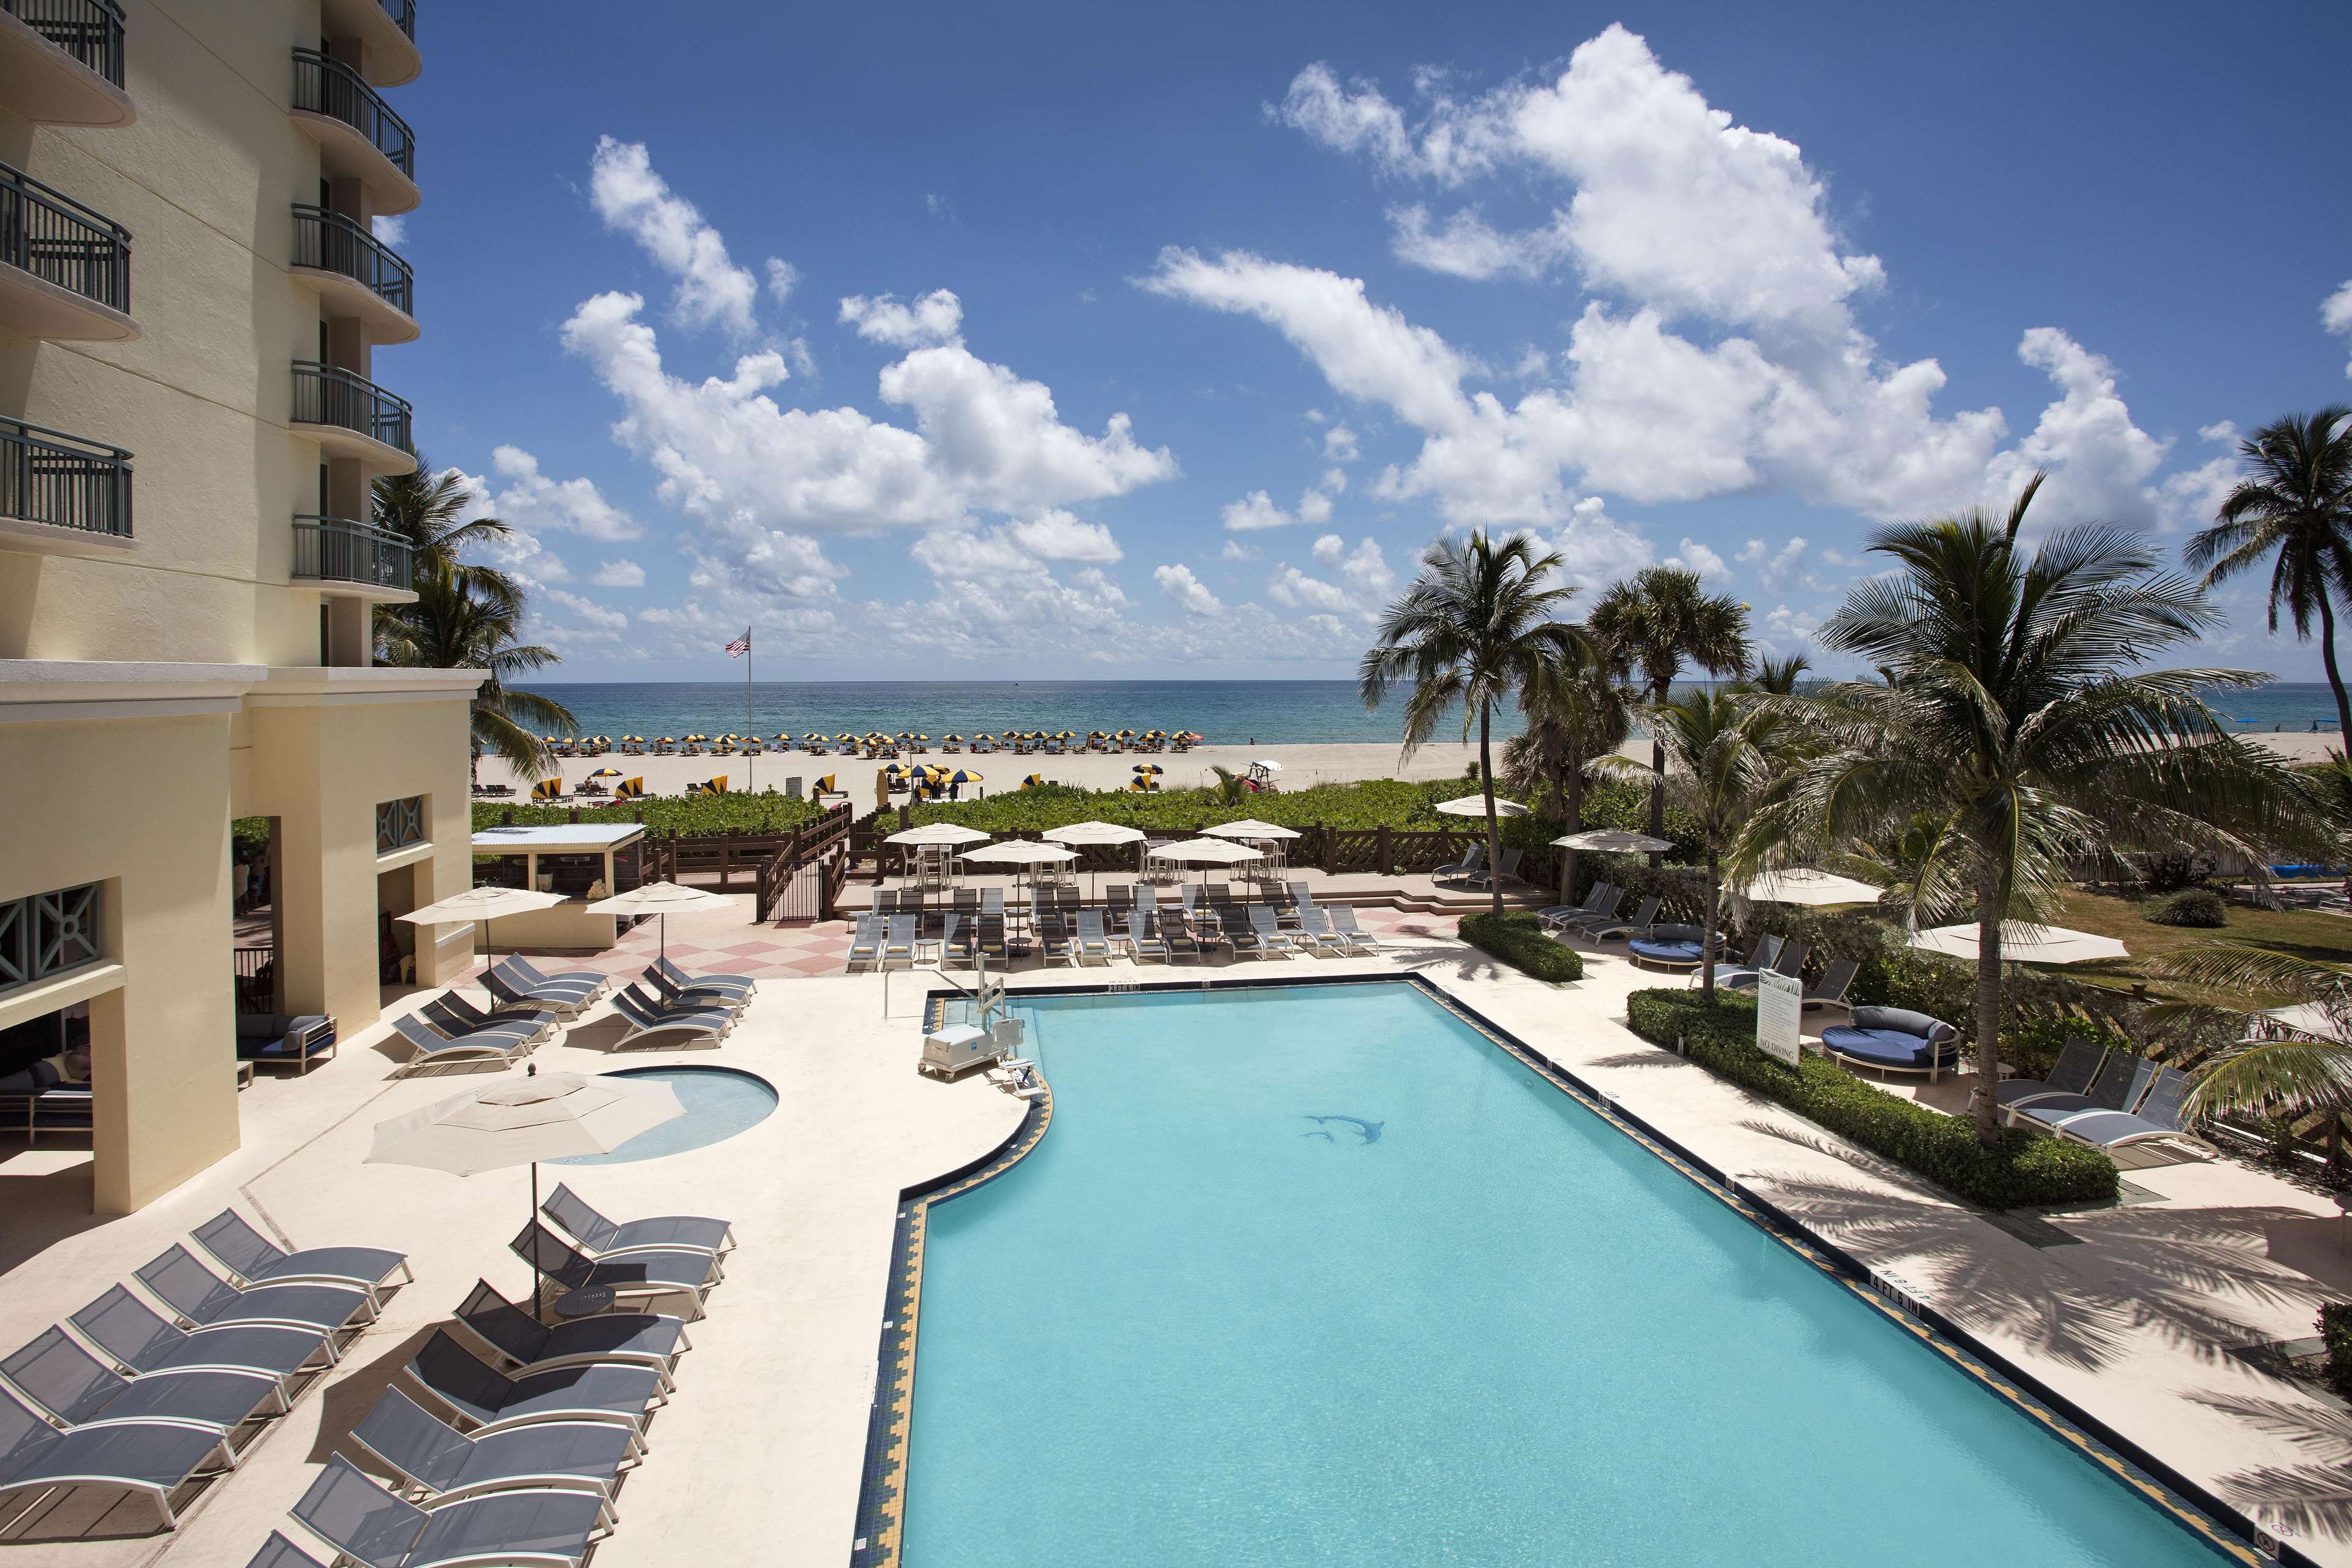 5 star hotels in west palm beach